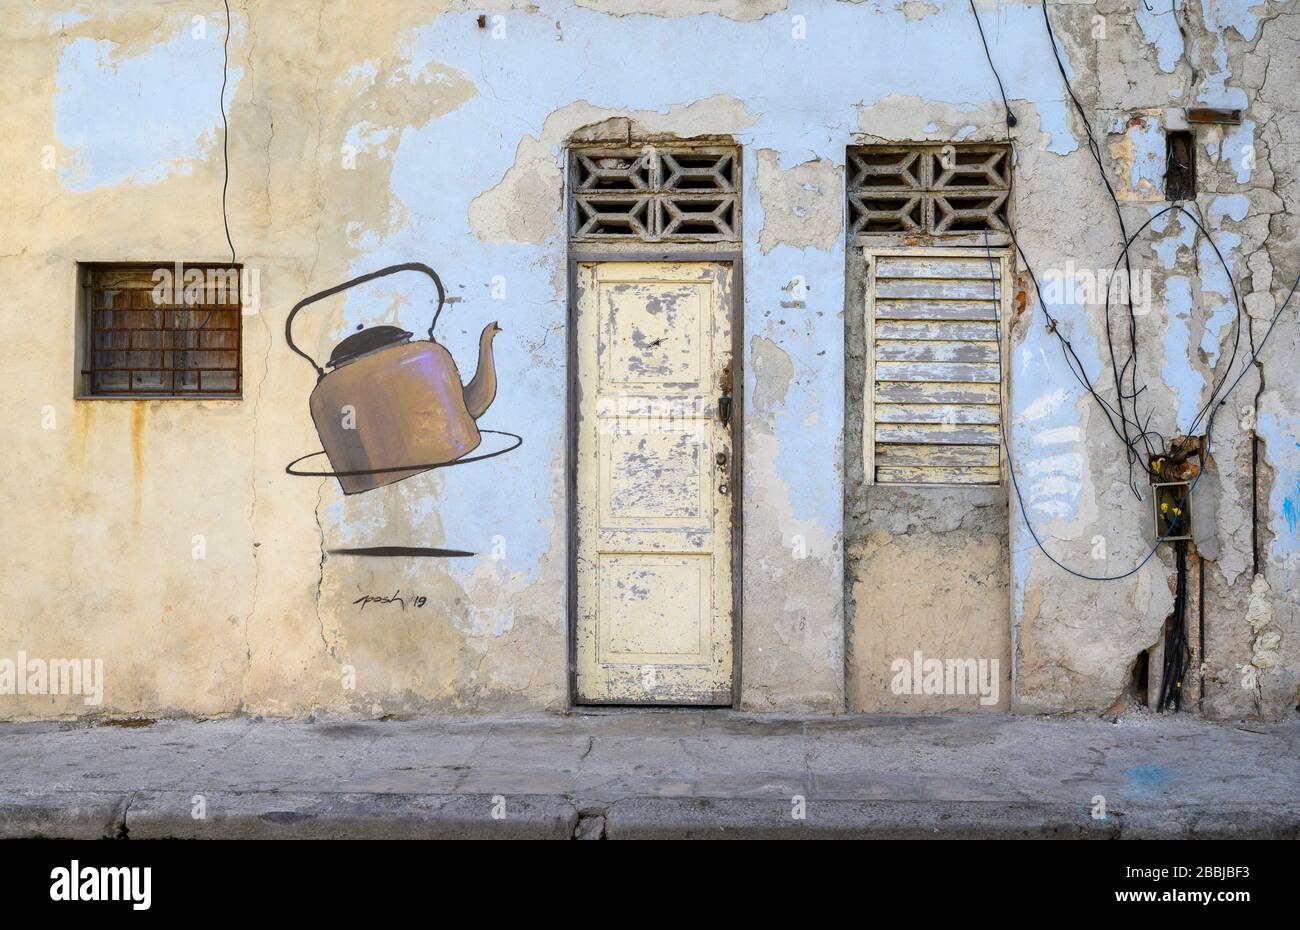 Weathered wall and teapot mural, Centro, Havana, Cuba Stock Photo